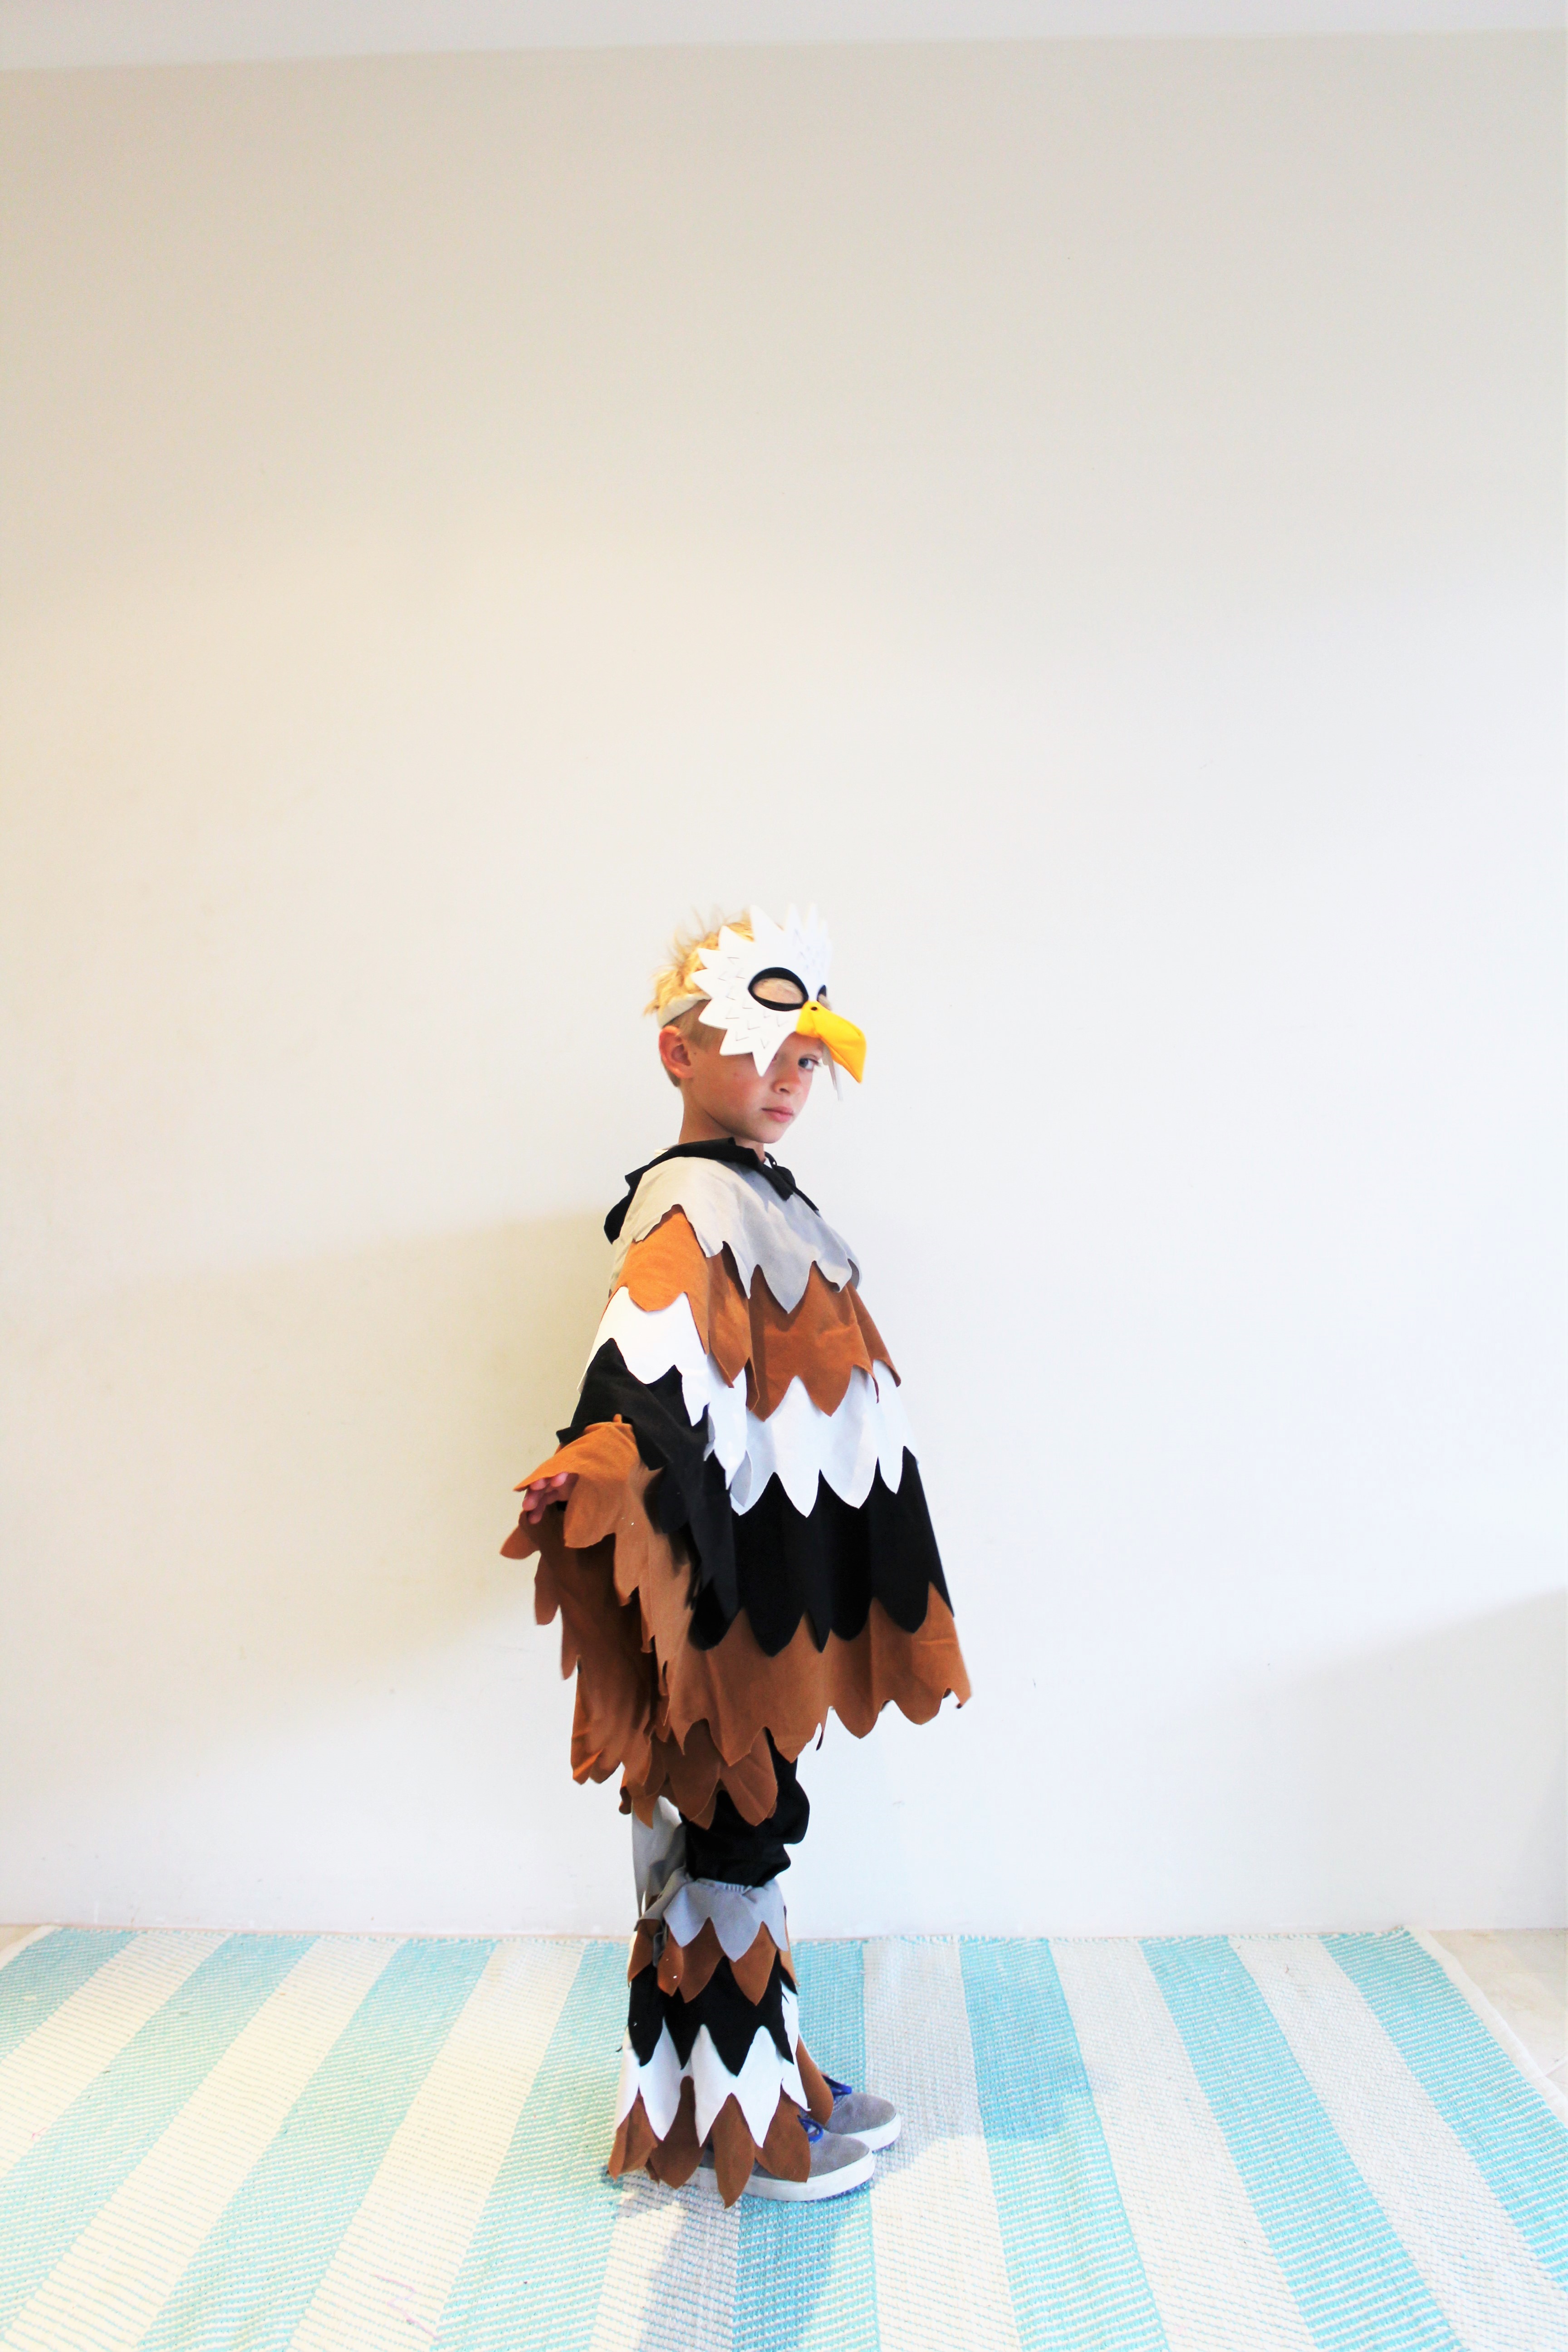 Bald Eagle DIY Costume